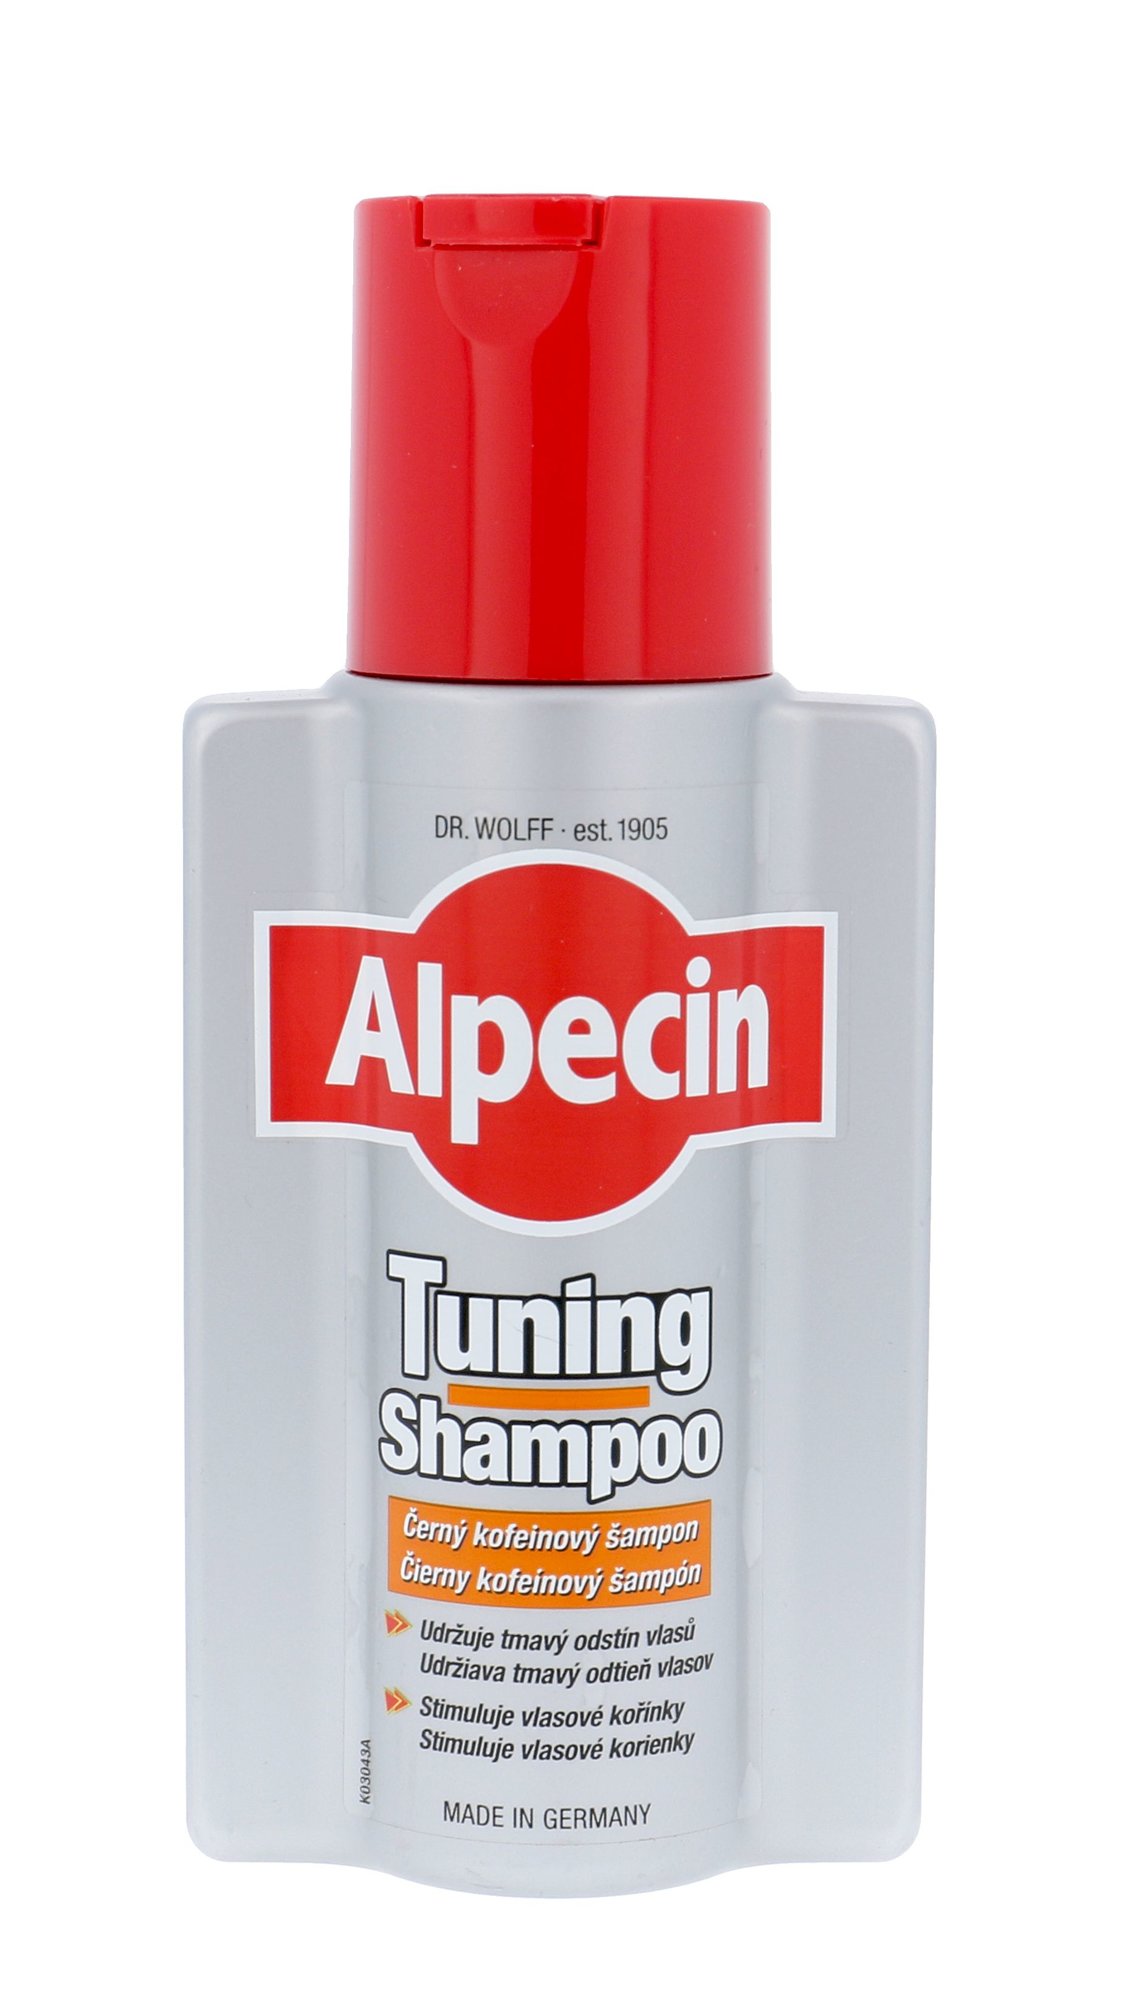 Alpecin Tuning Shampoo 200ml šampūnas